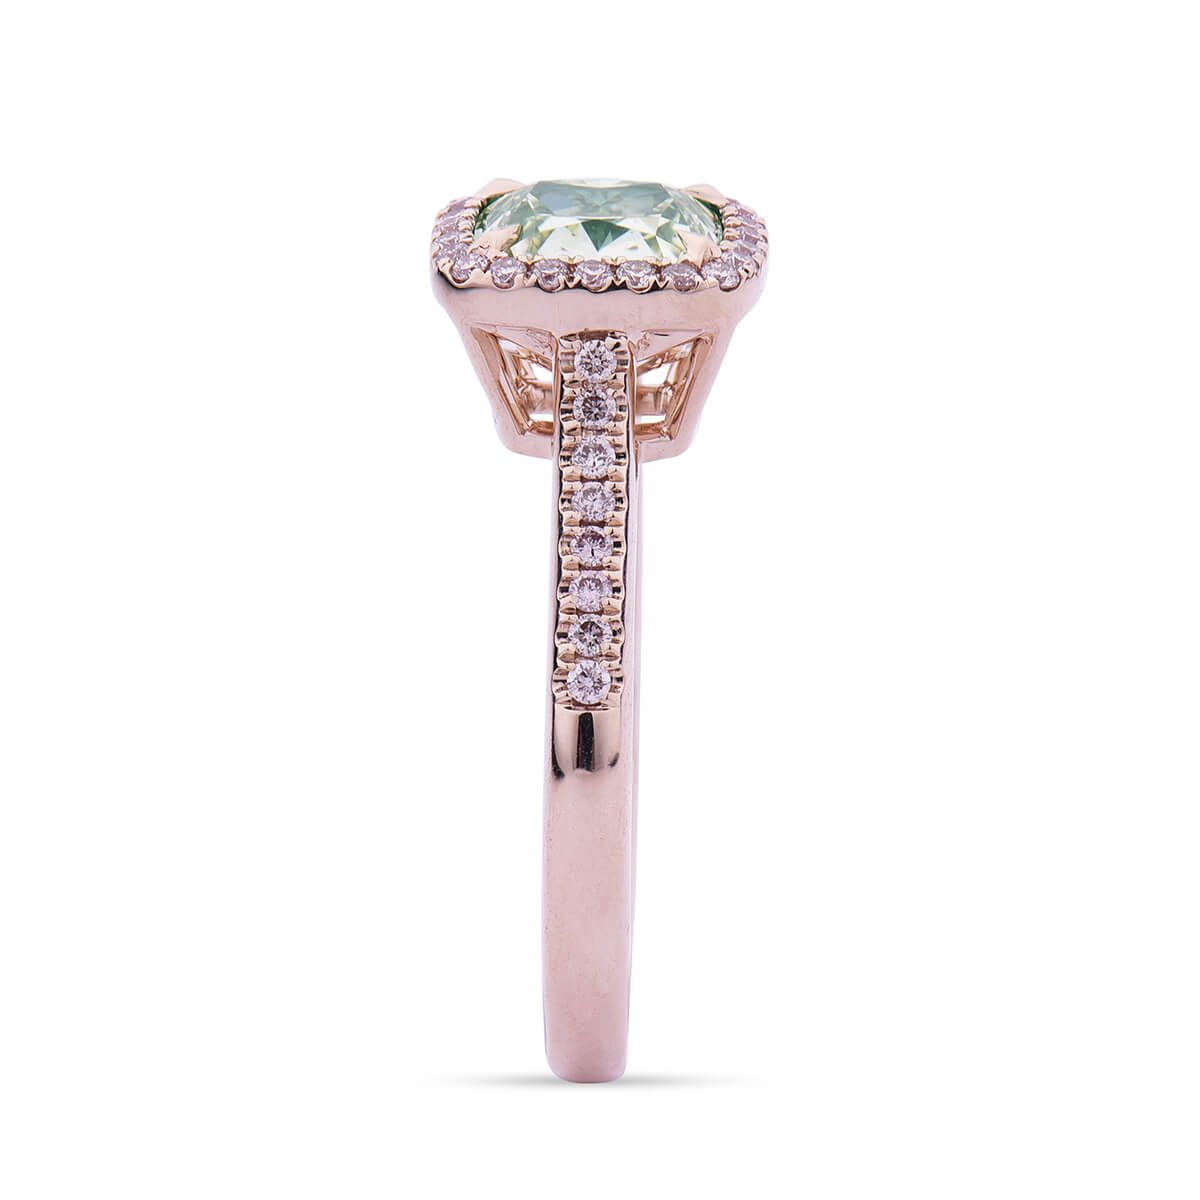 Fancy Brownish Greenish Yellow Diamond Ring, 1.62 Ct. (1.86 Ct. TW), Cushion shape, GIA Certified, 7228925223